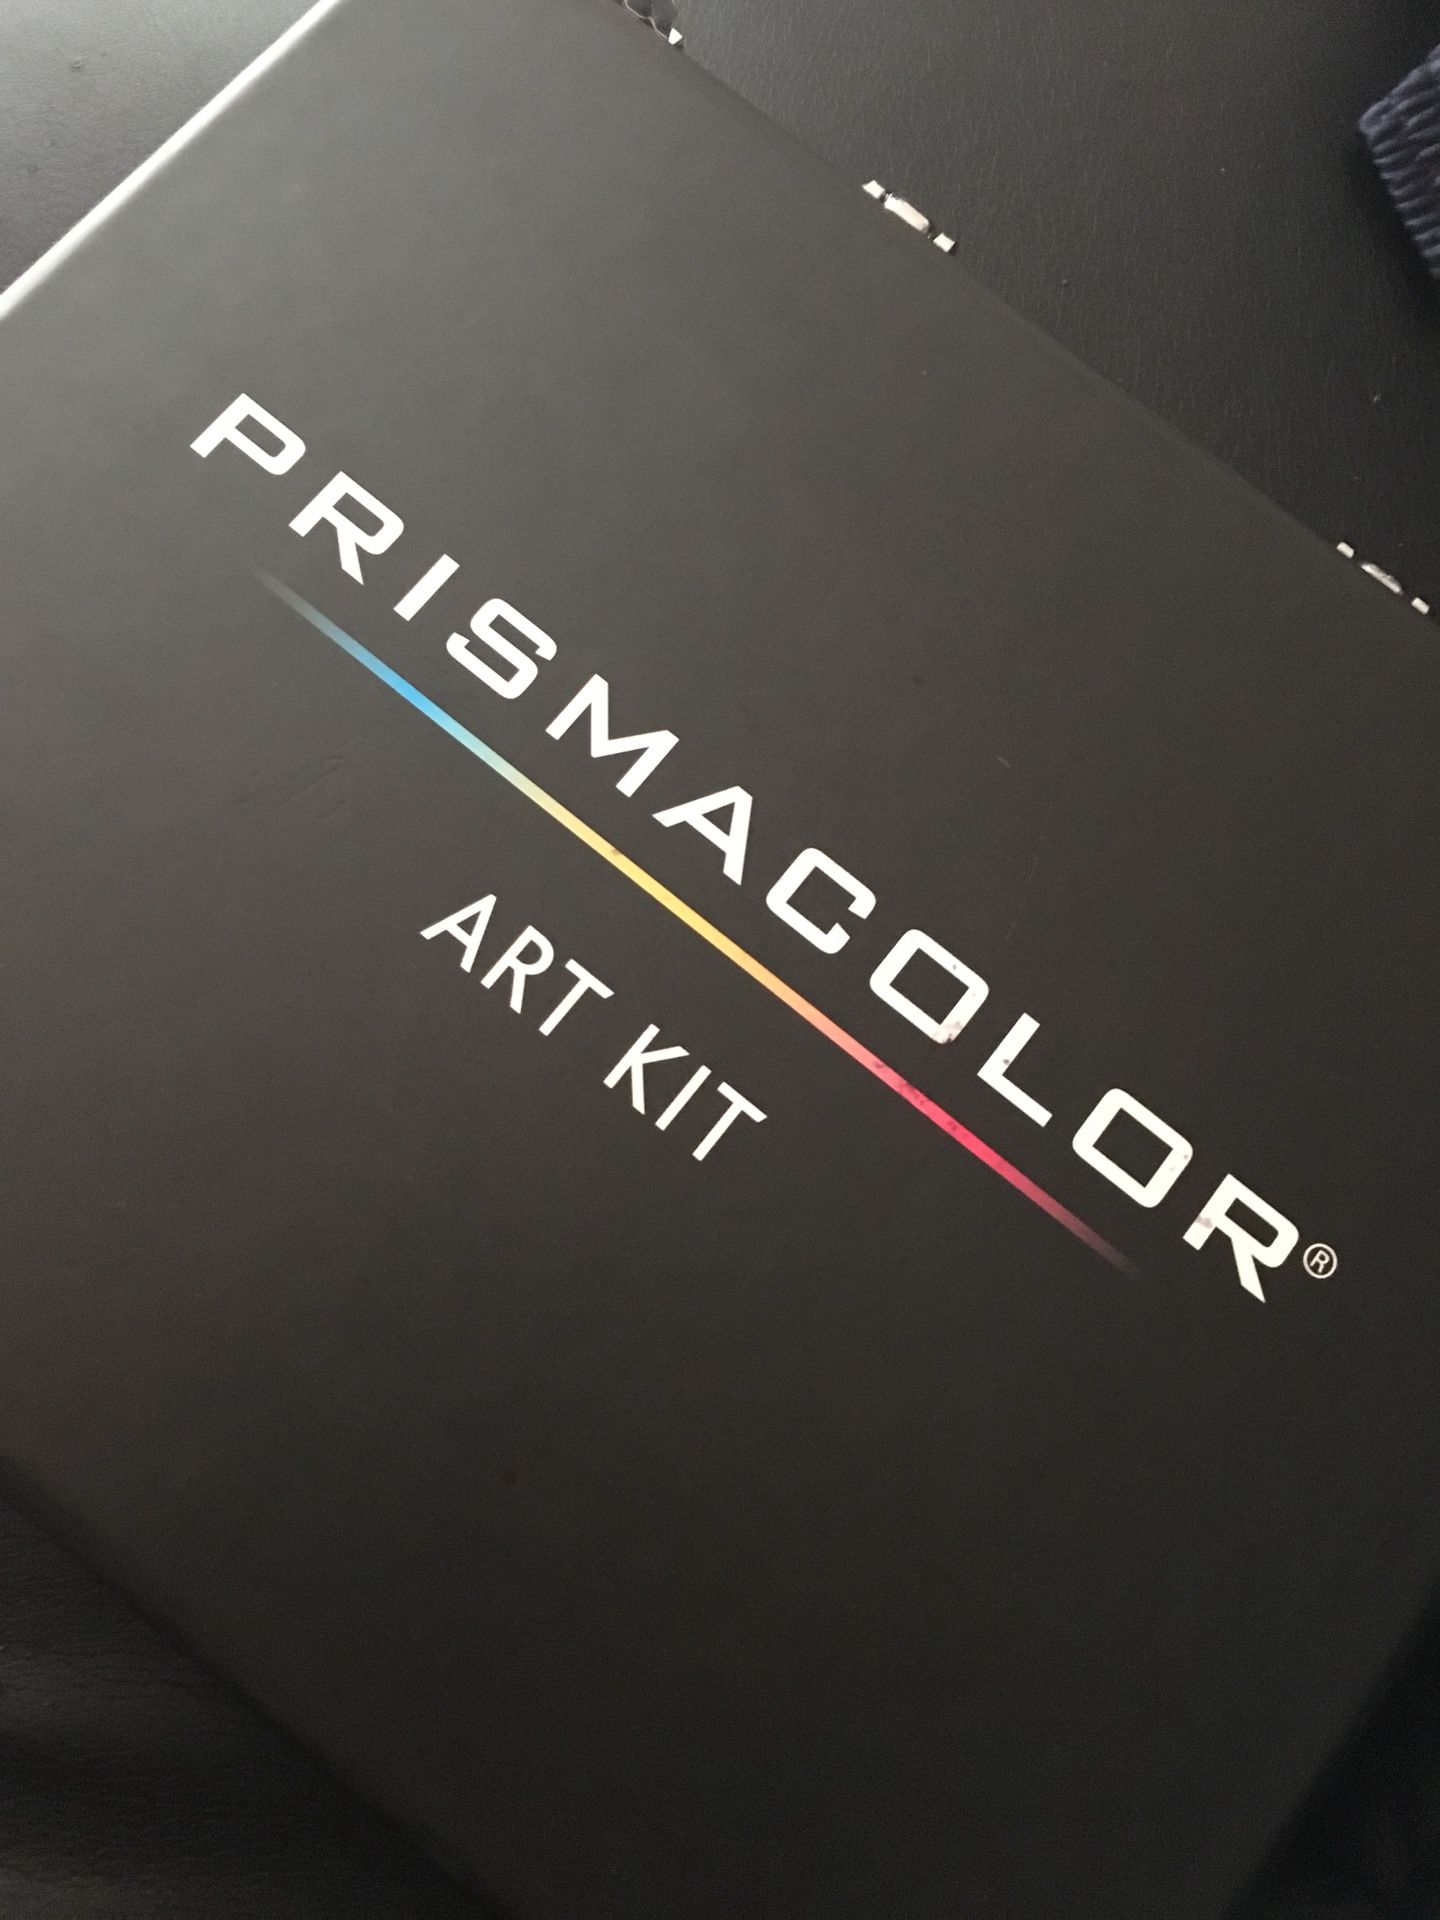 Prisma Color & Sharpie Art Kit for Sale in San Bernardino, CA - OfferUp